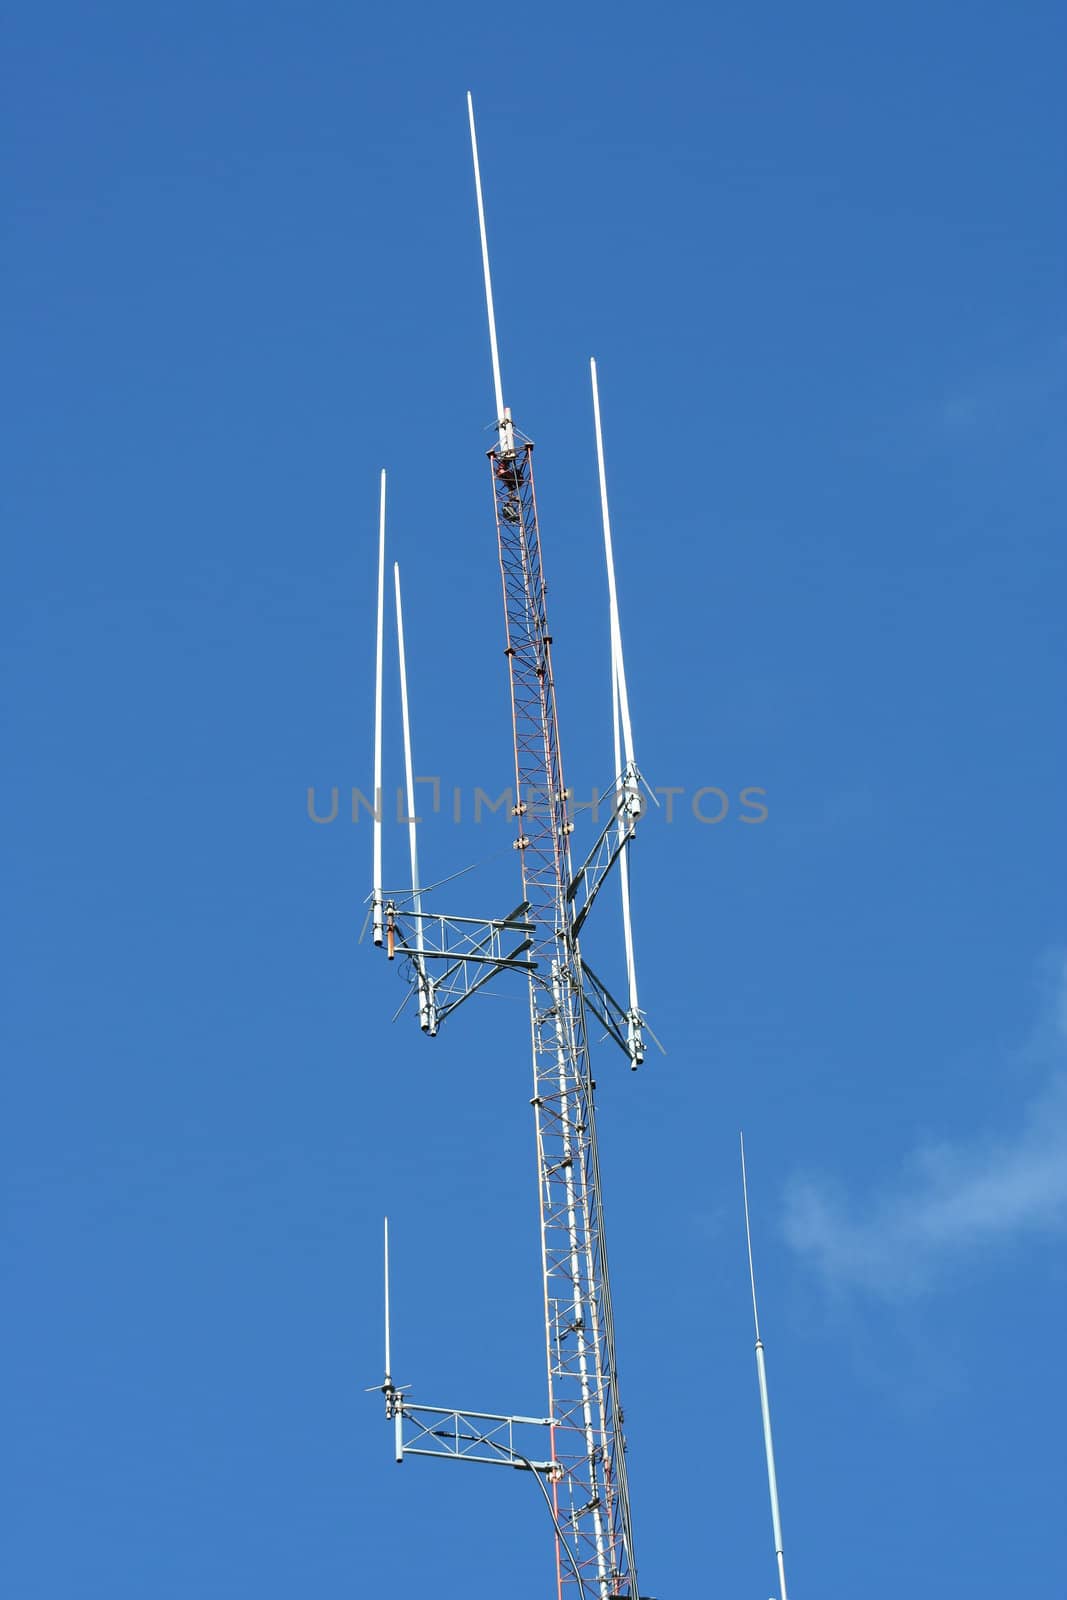 A Radio Antenna against a blue sky